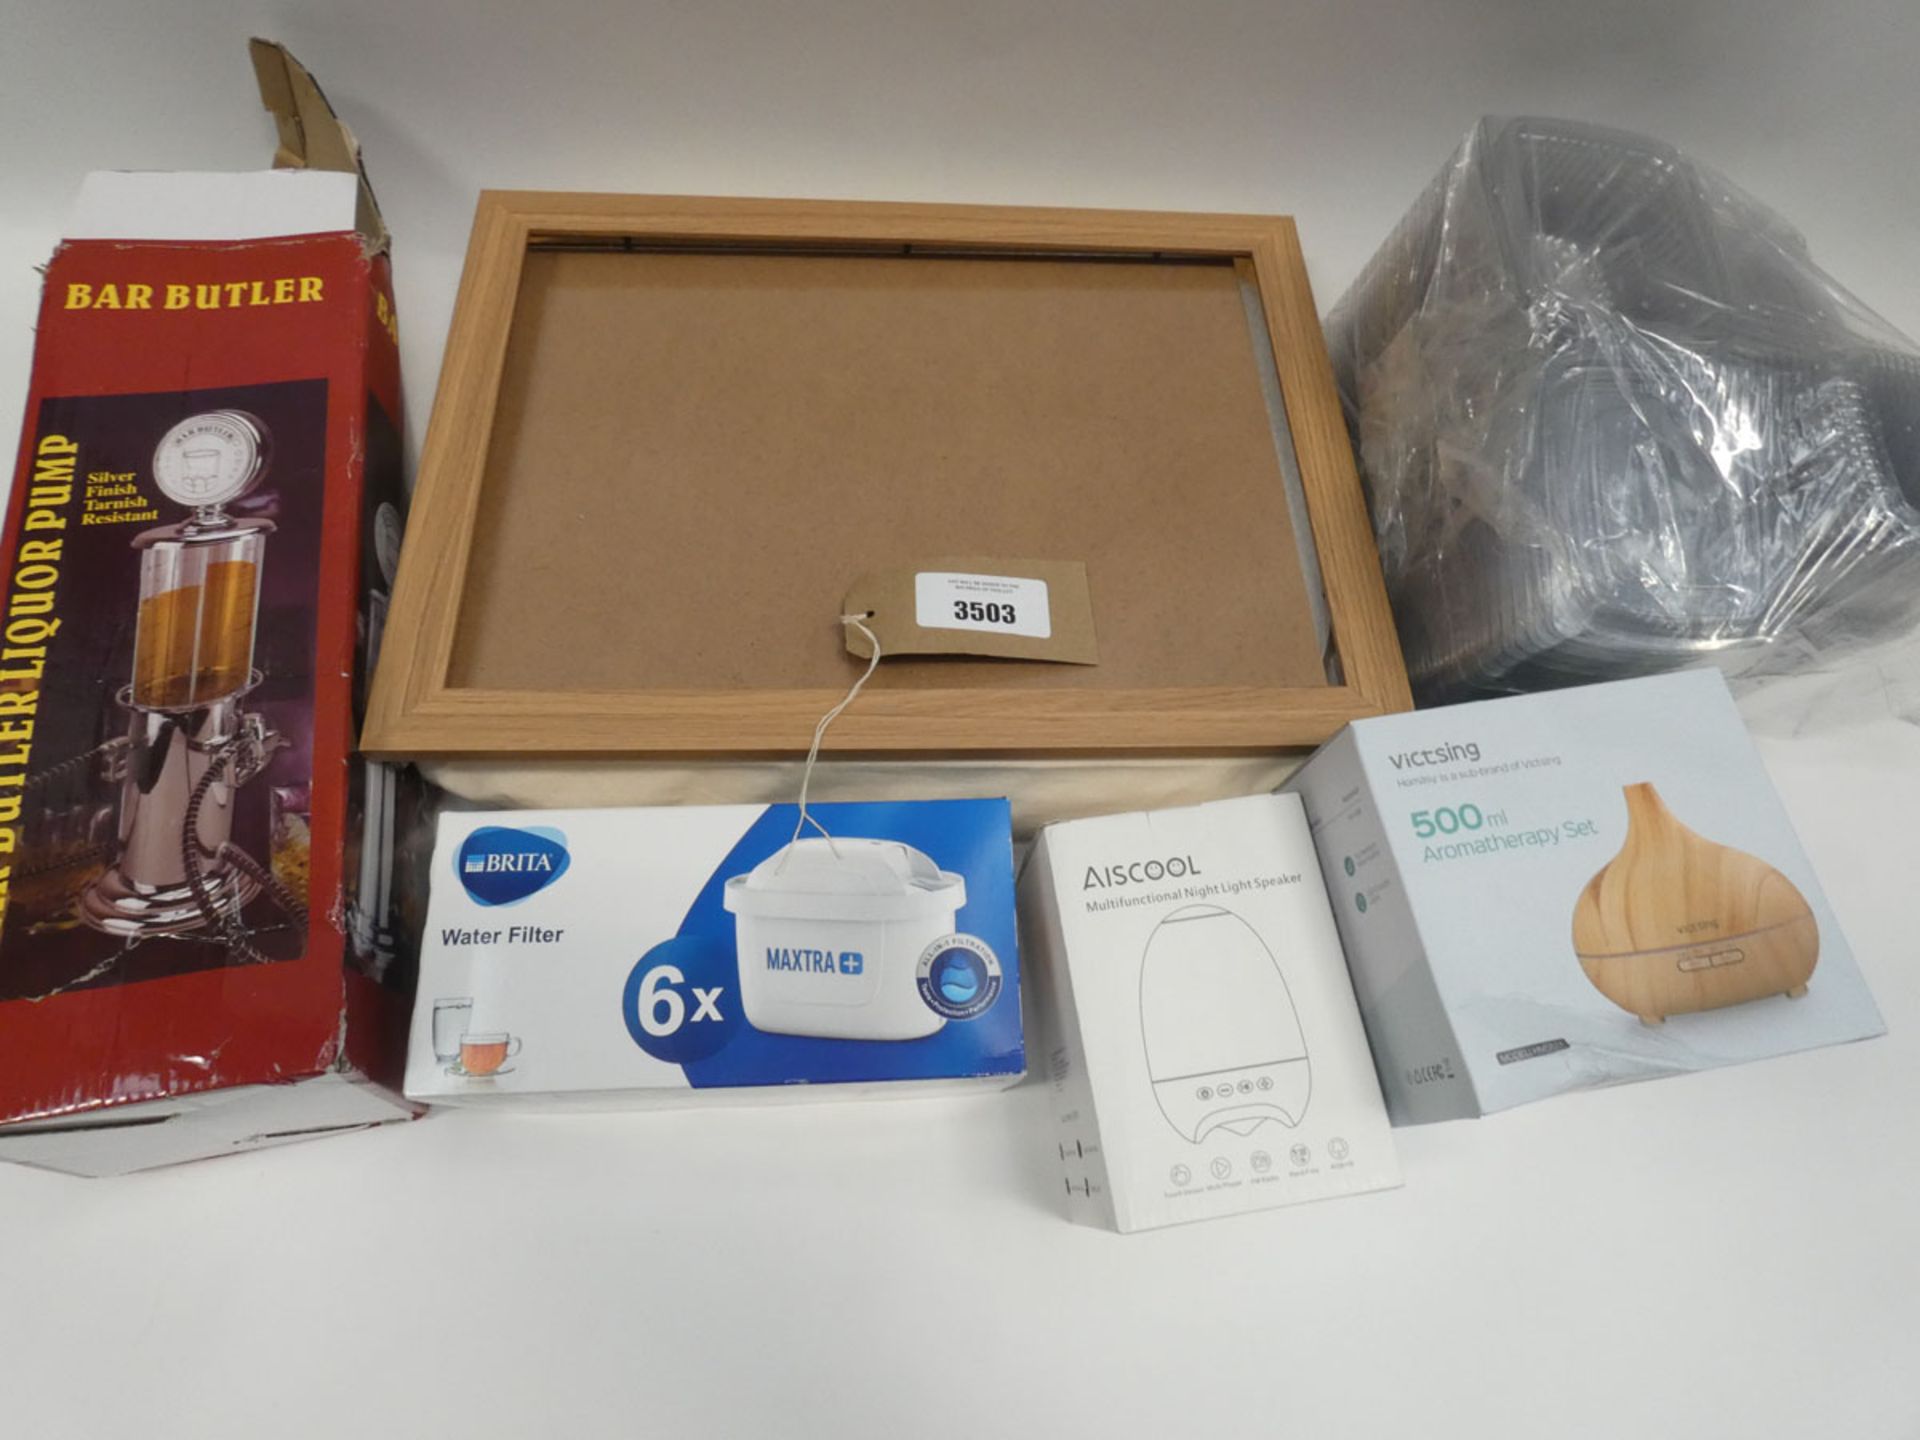 Bag containing aromatherapy set, night light speaker, bar butler, dinner tray, assortment of small